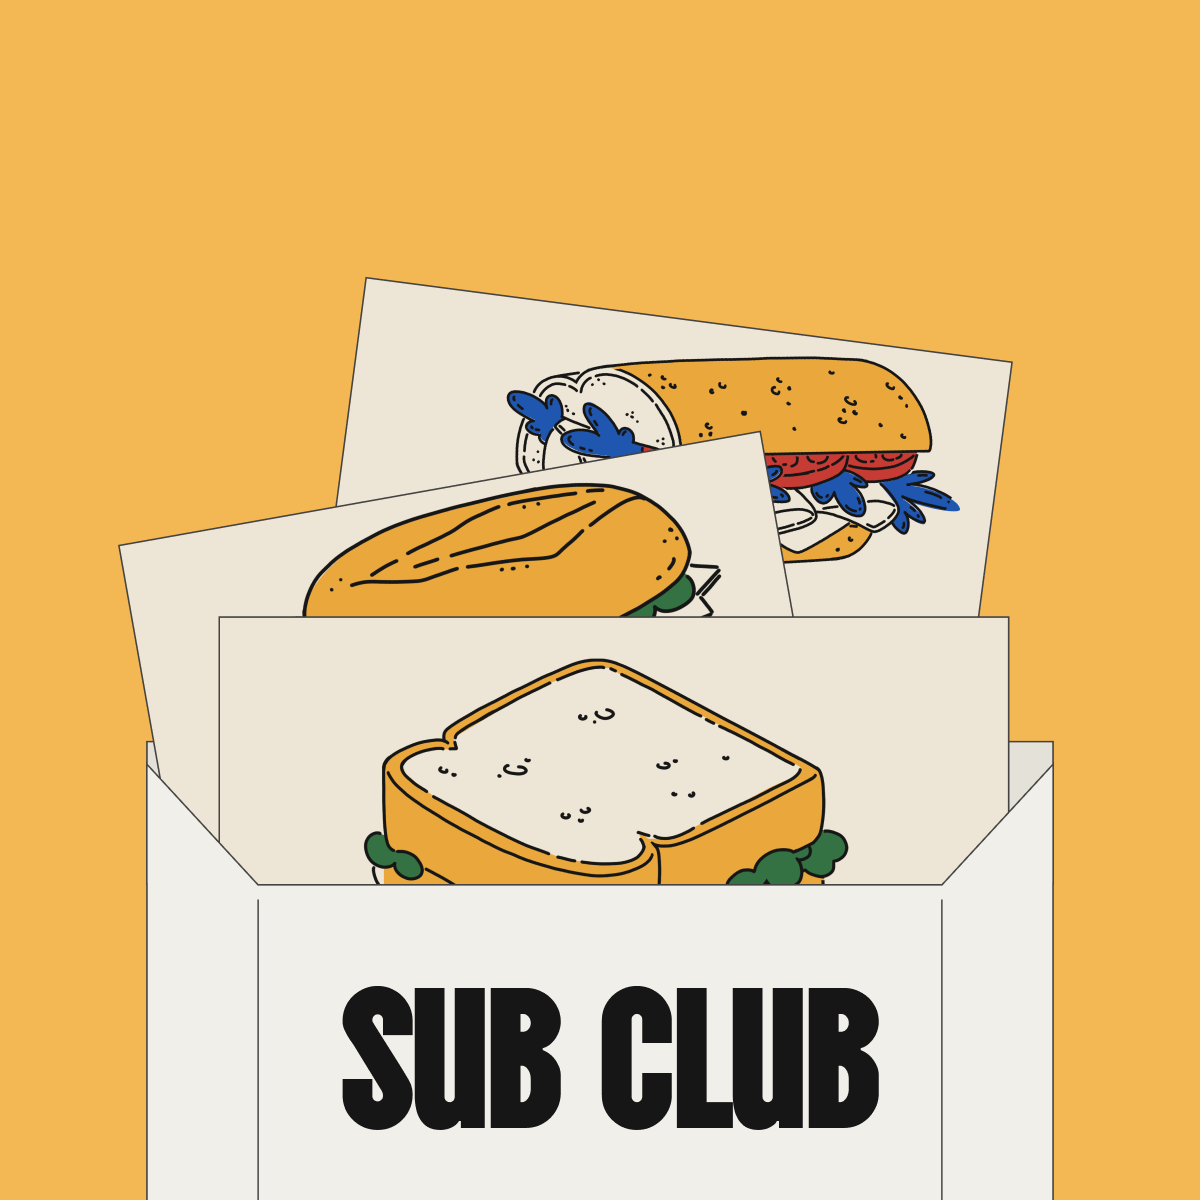 The Sub Club Newsletter